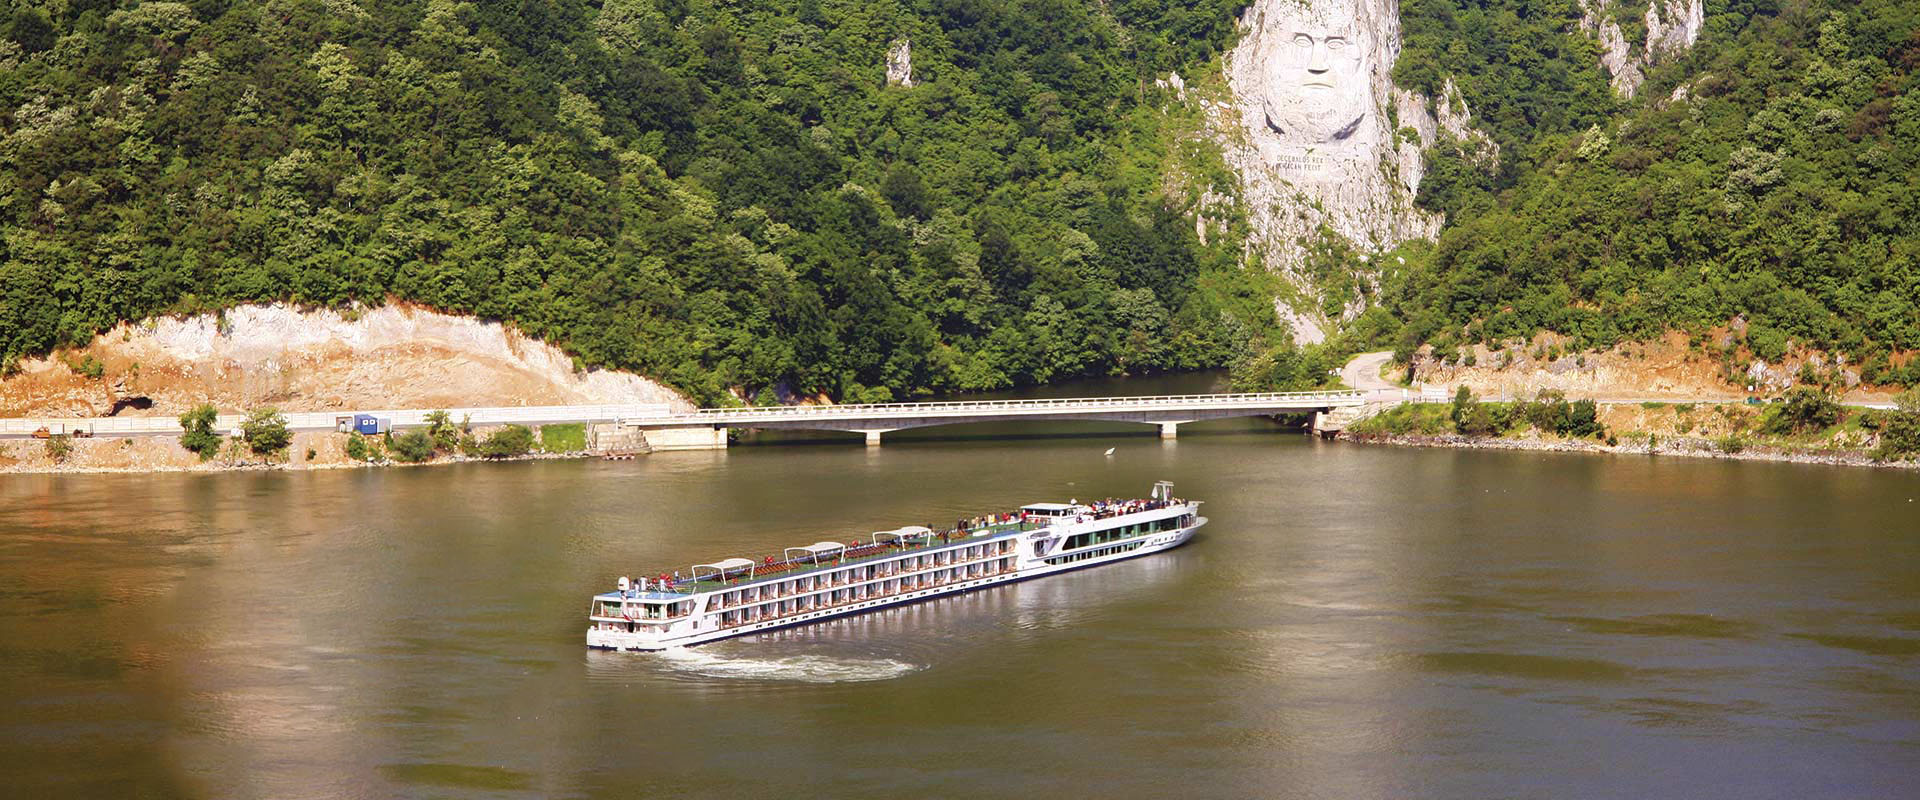 scenic river cruise excursions